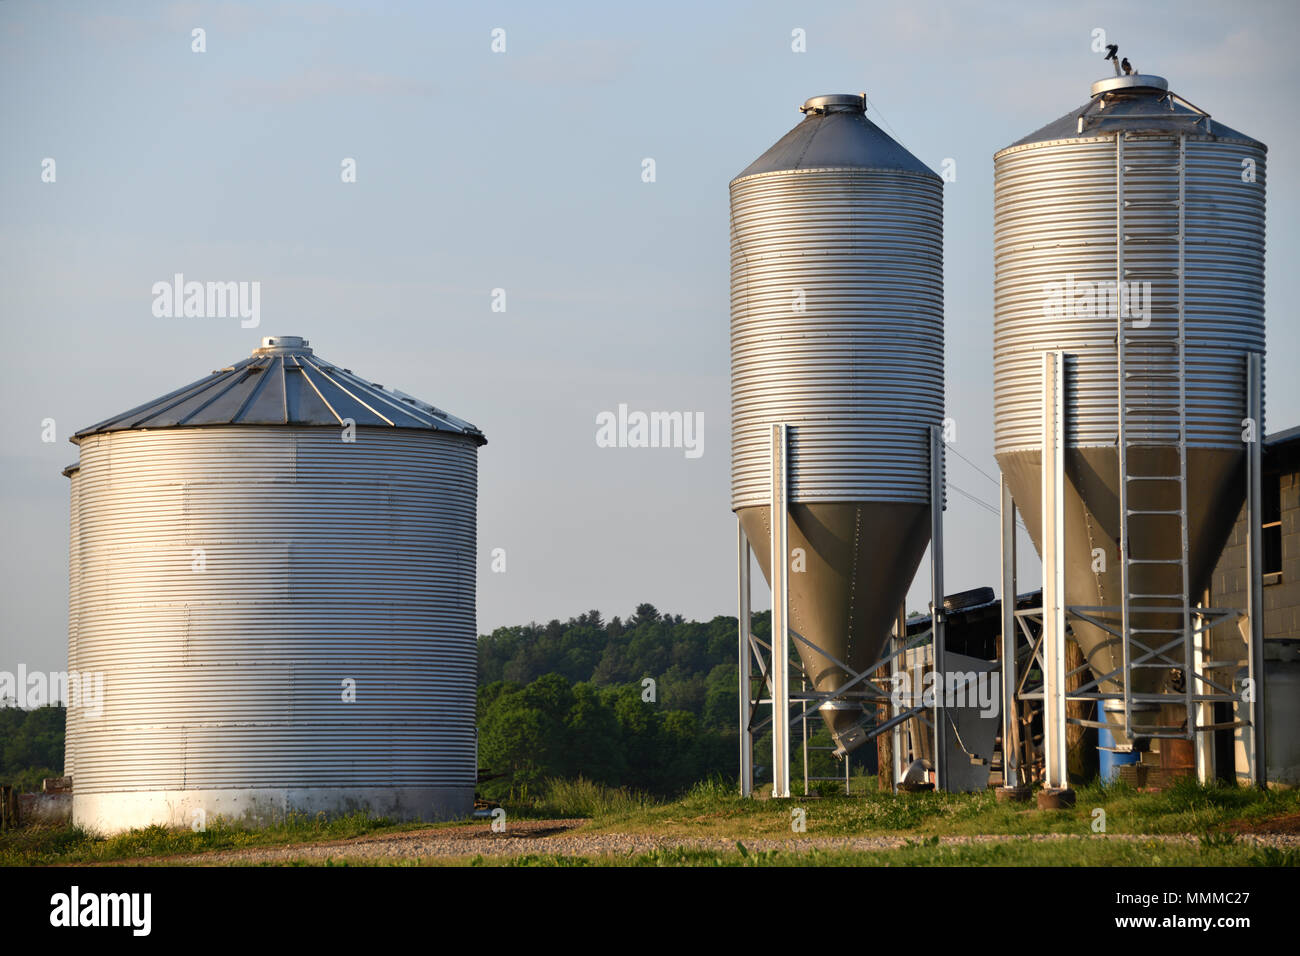 metal grain silos in rural America Stock Photo